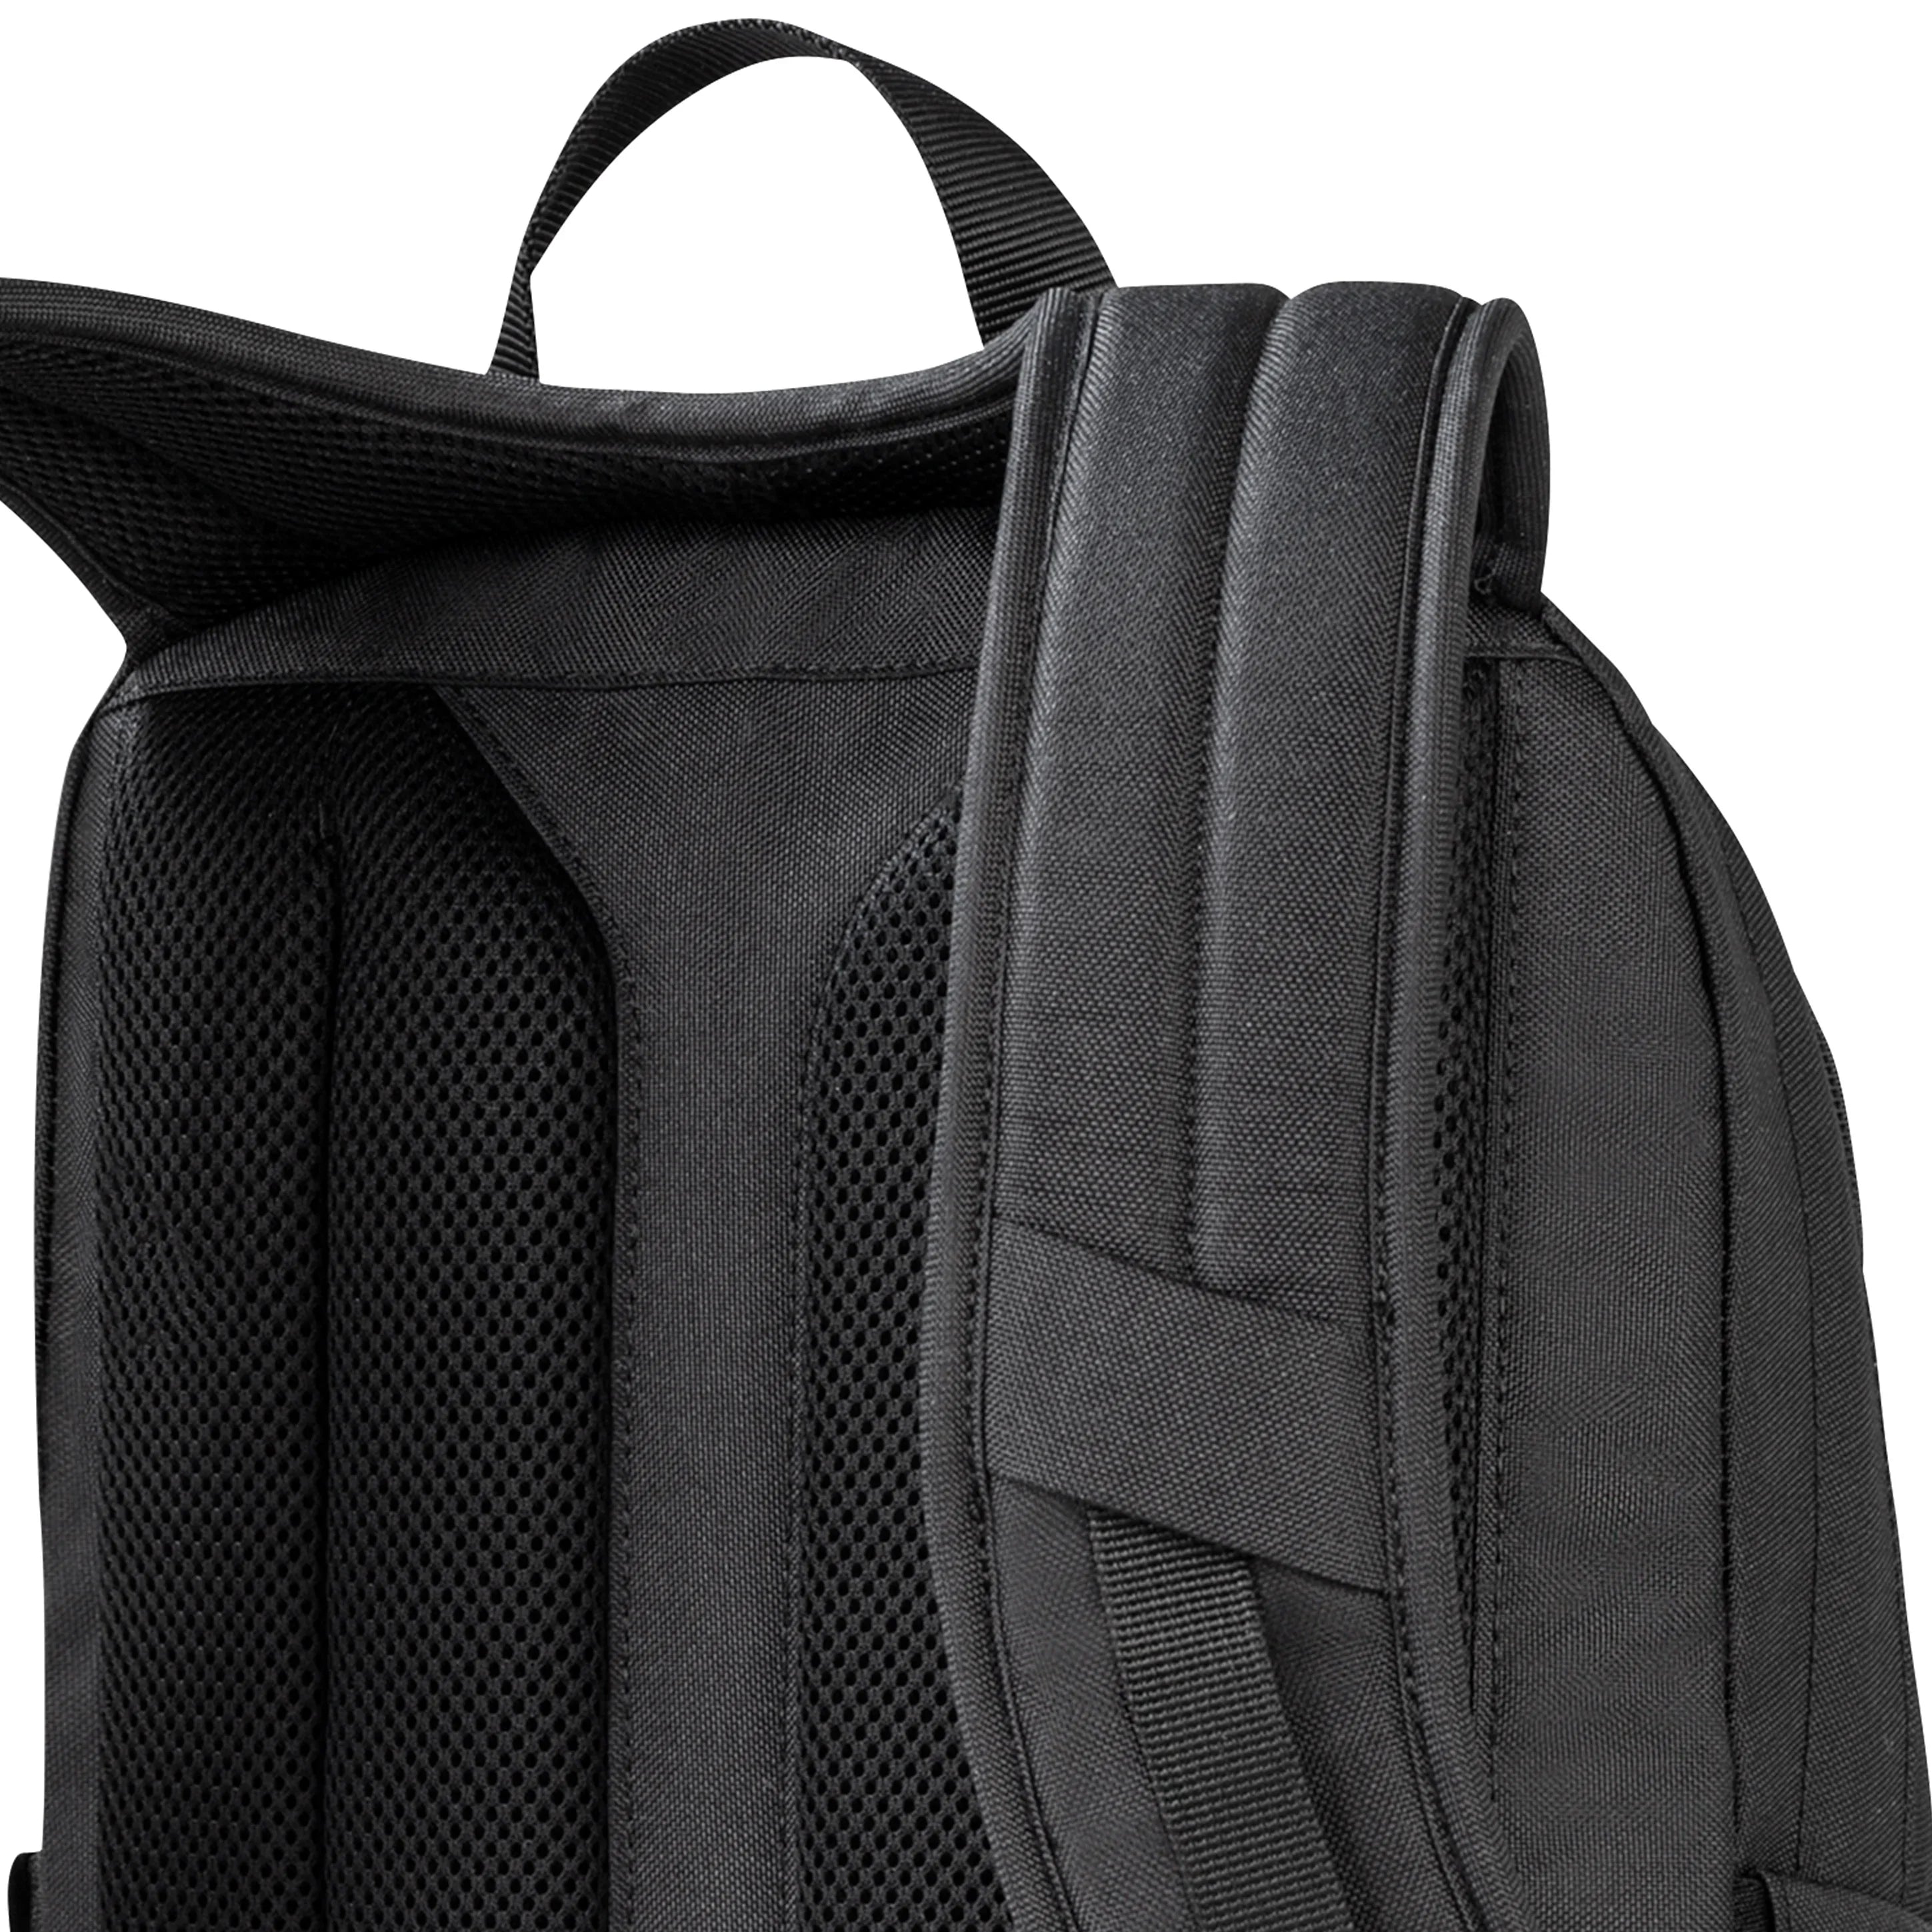 Jack Wolfskin Daypacks & Bags Perfect Day Tagesrucksack 44 cm - black